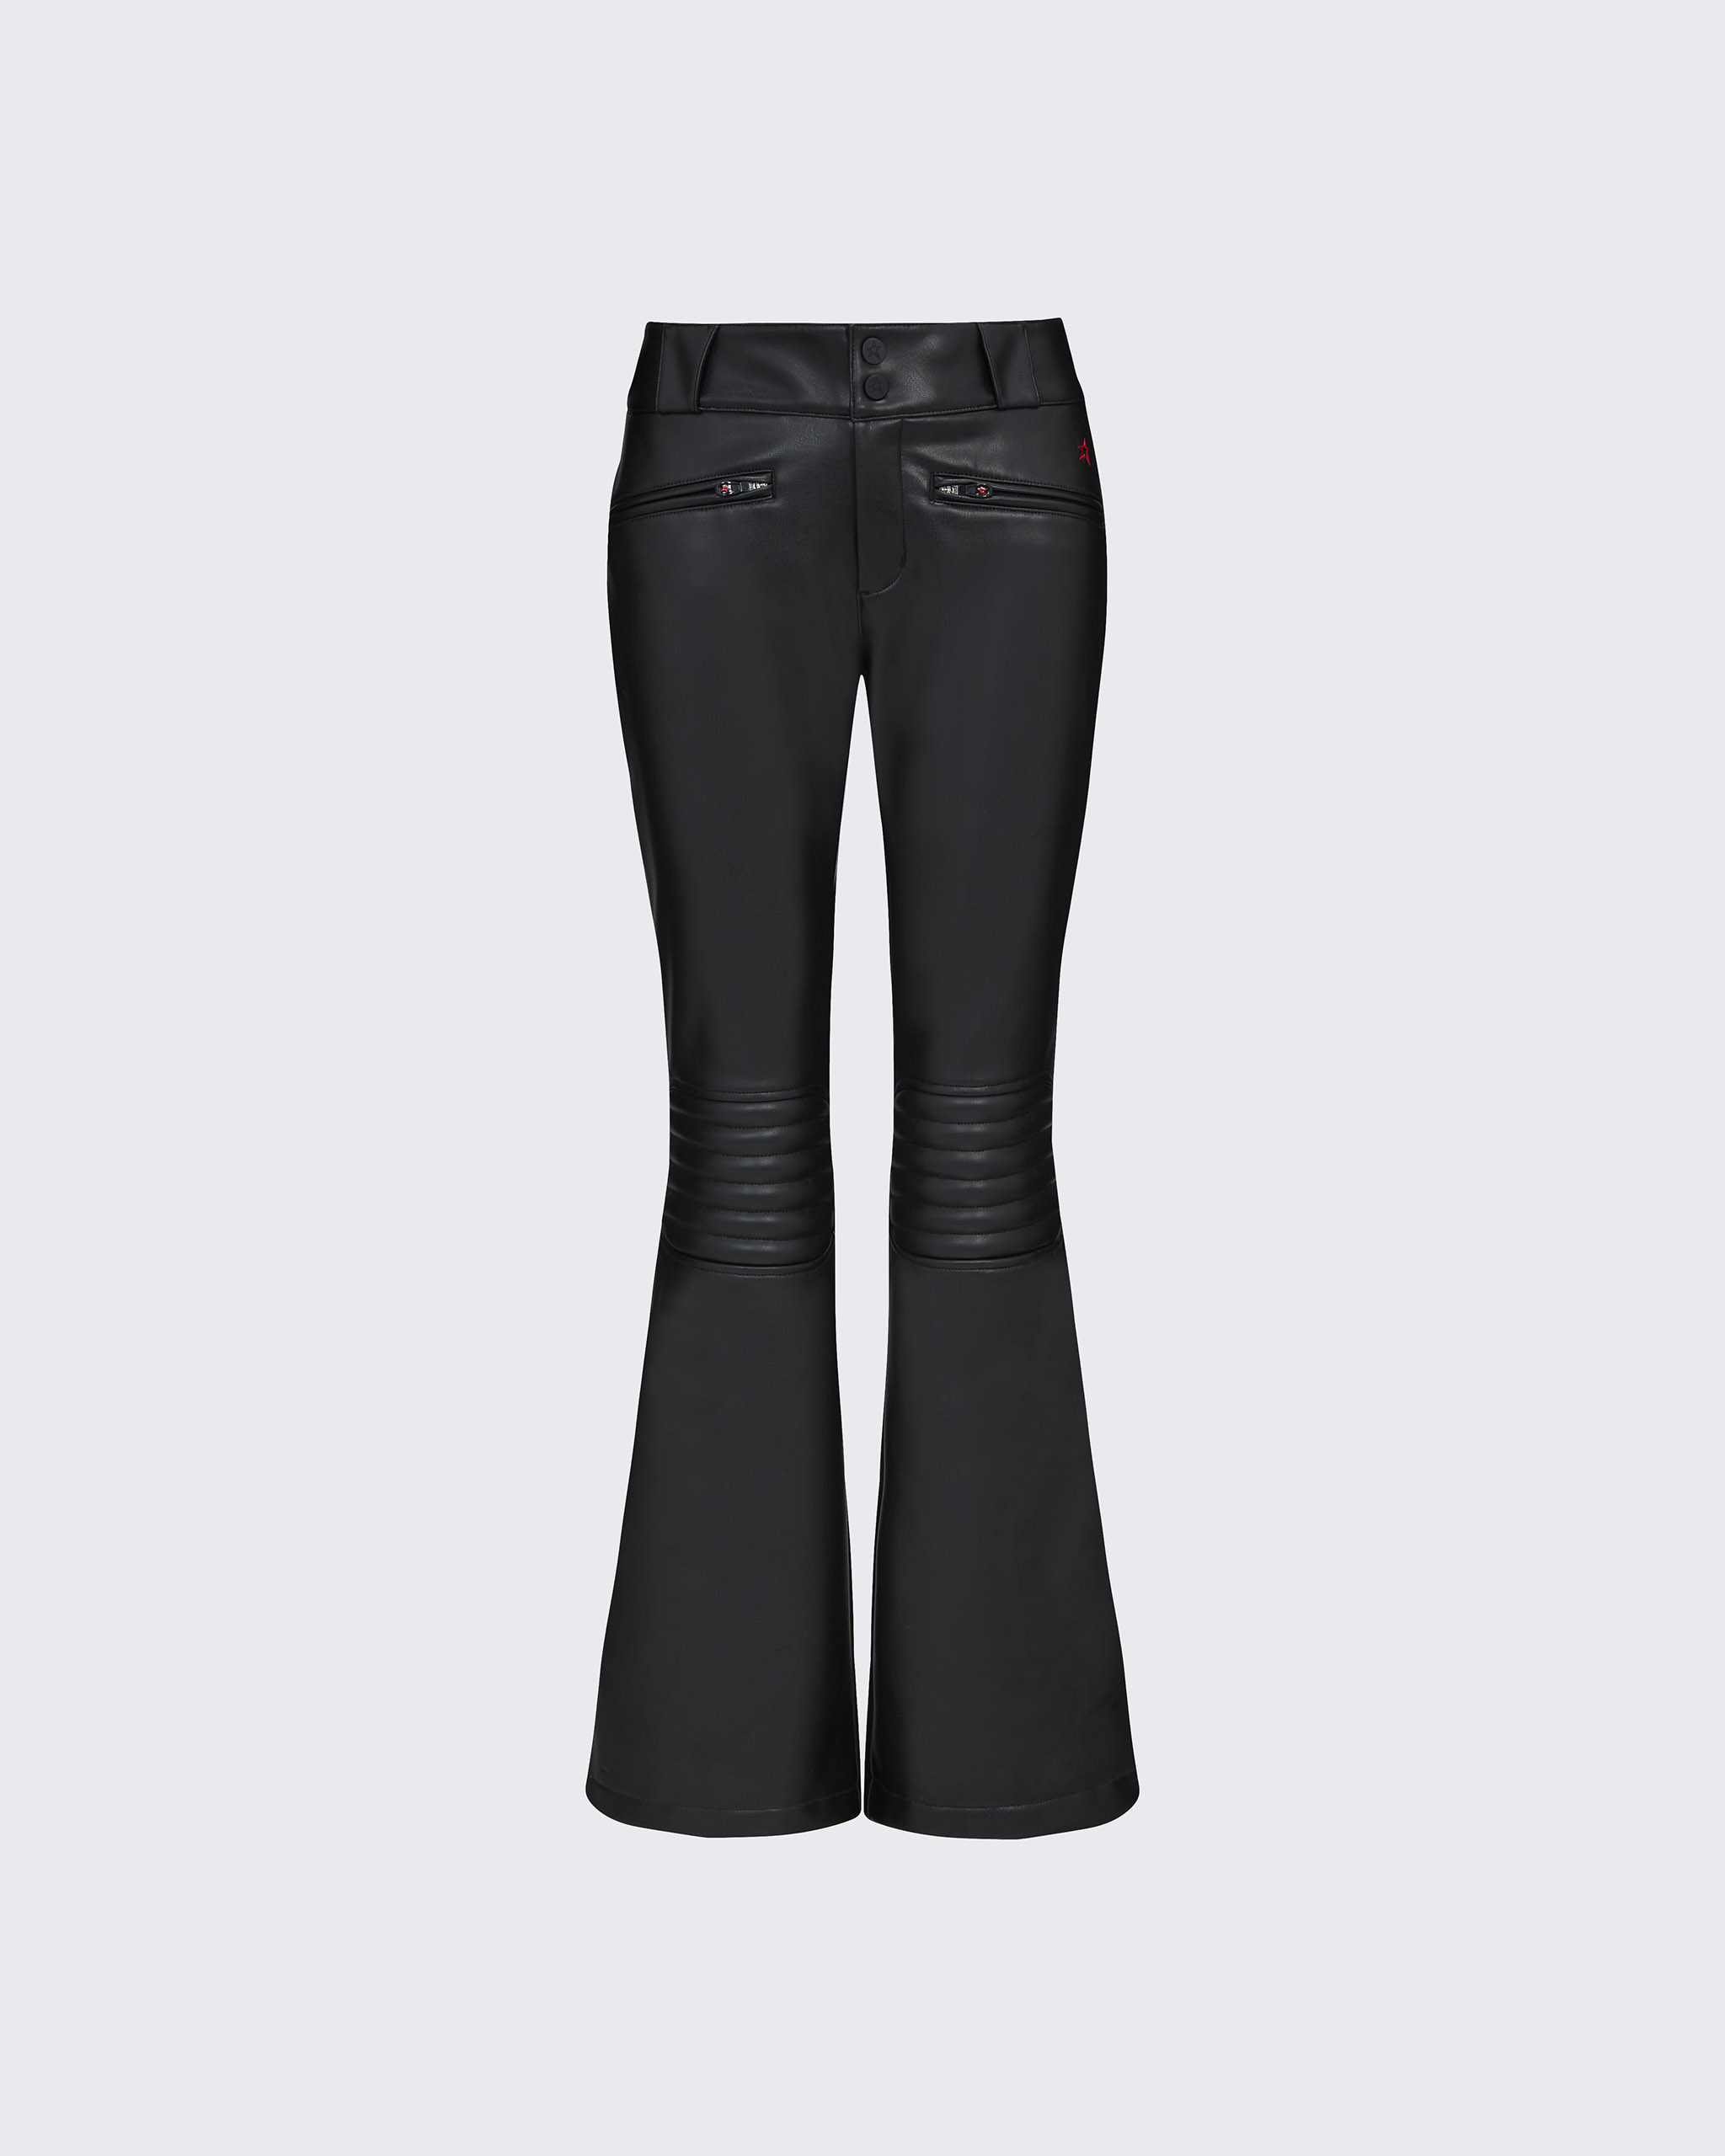 Zara 100% Real Leather Pants Leggings Sz XS Au 6/8